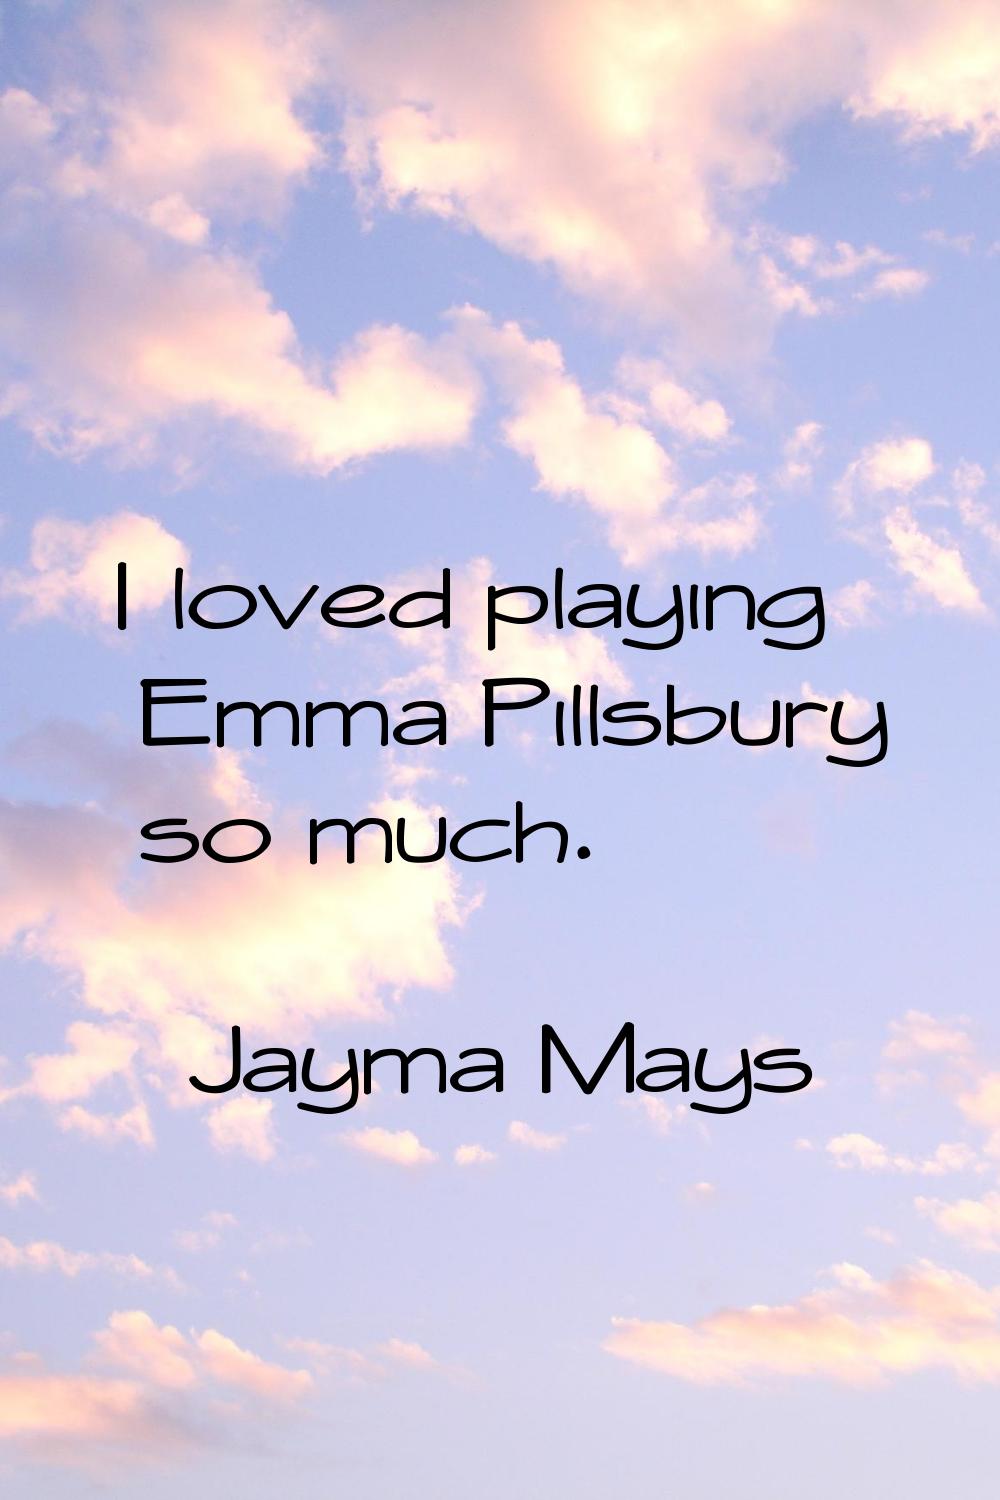 I loved playing Emma Pillsbury so much.